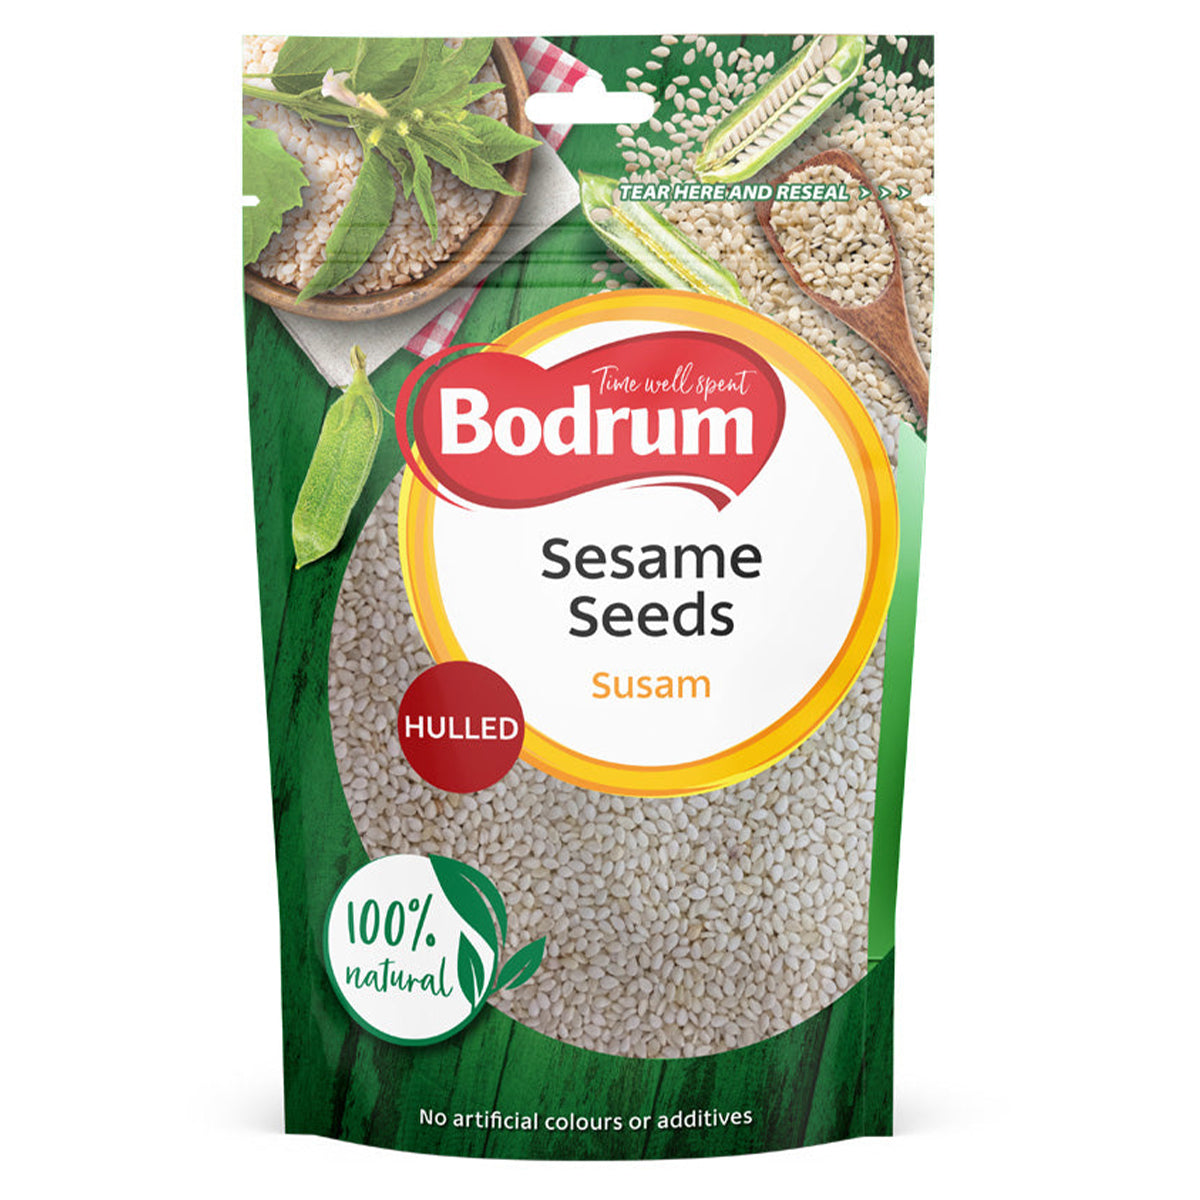 Bodrum - Sesame Seeds - 150g in a bag.